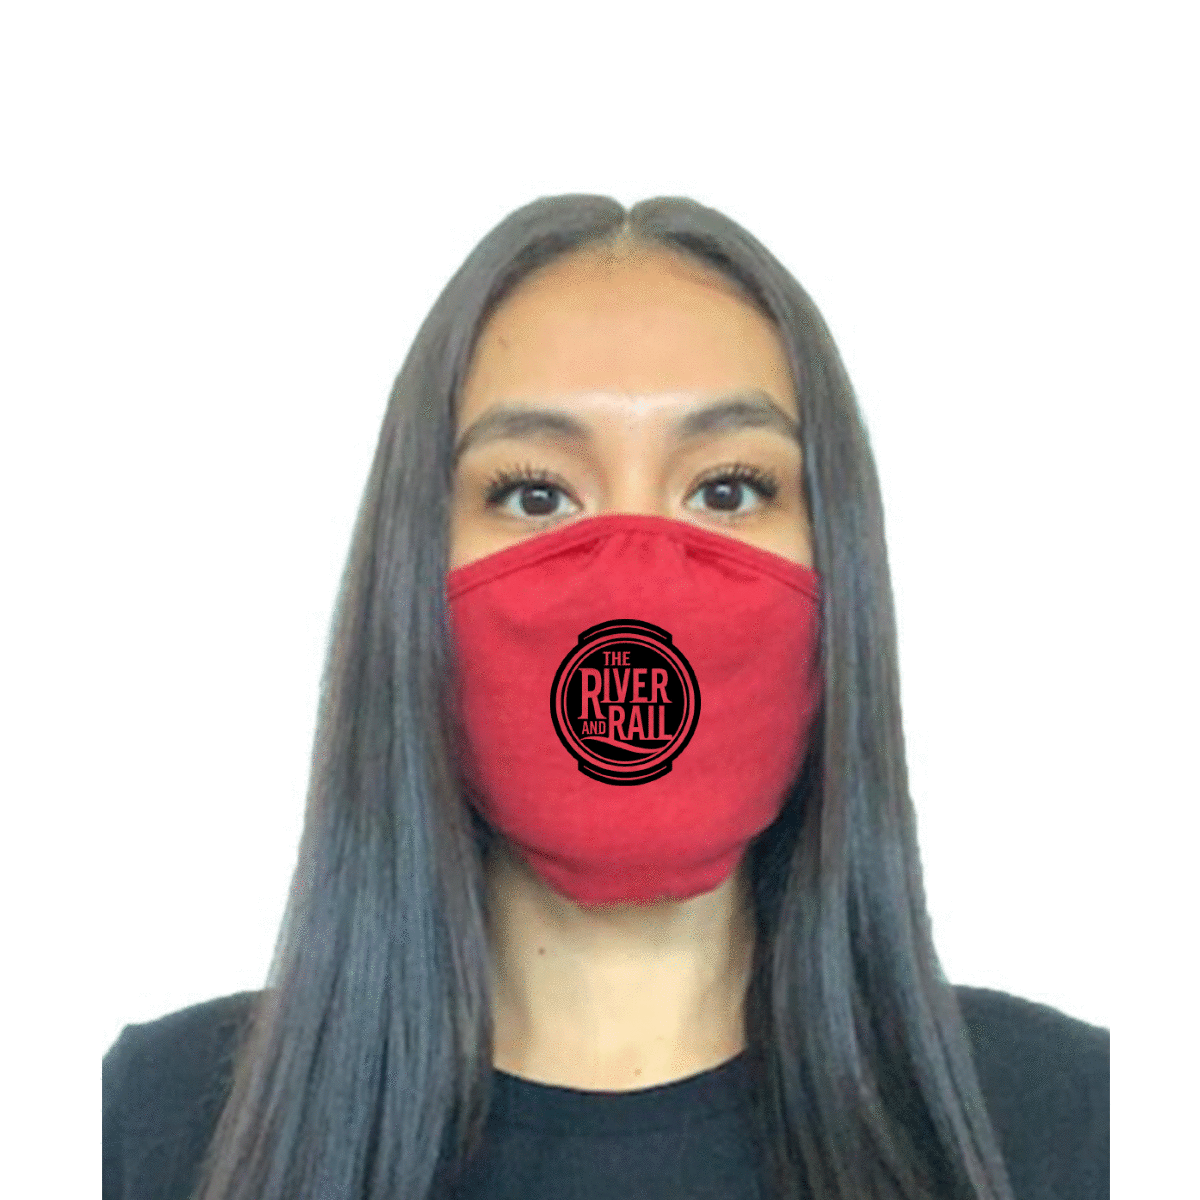 Press Press Merch - Virginia - Custom Face Mask - Restaurant Face Covering